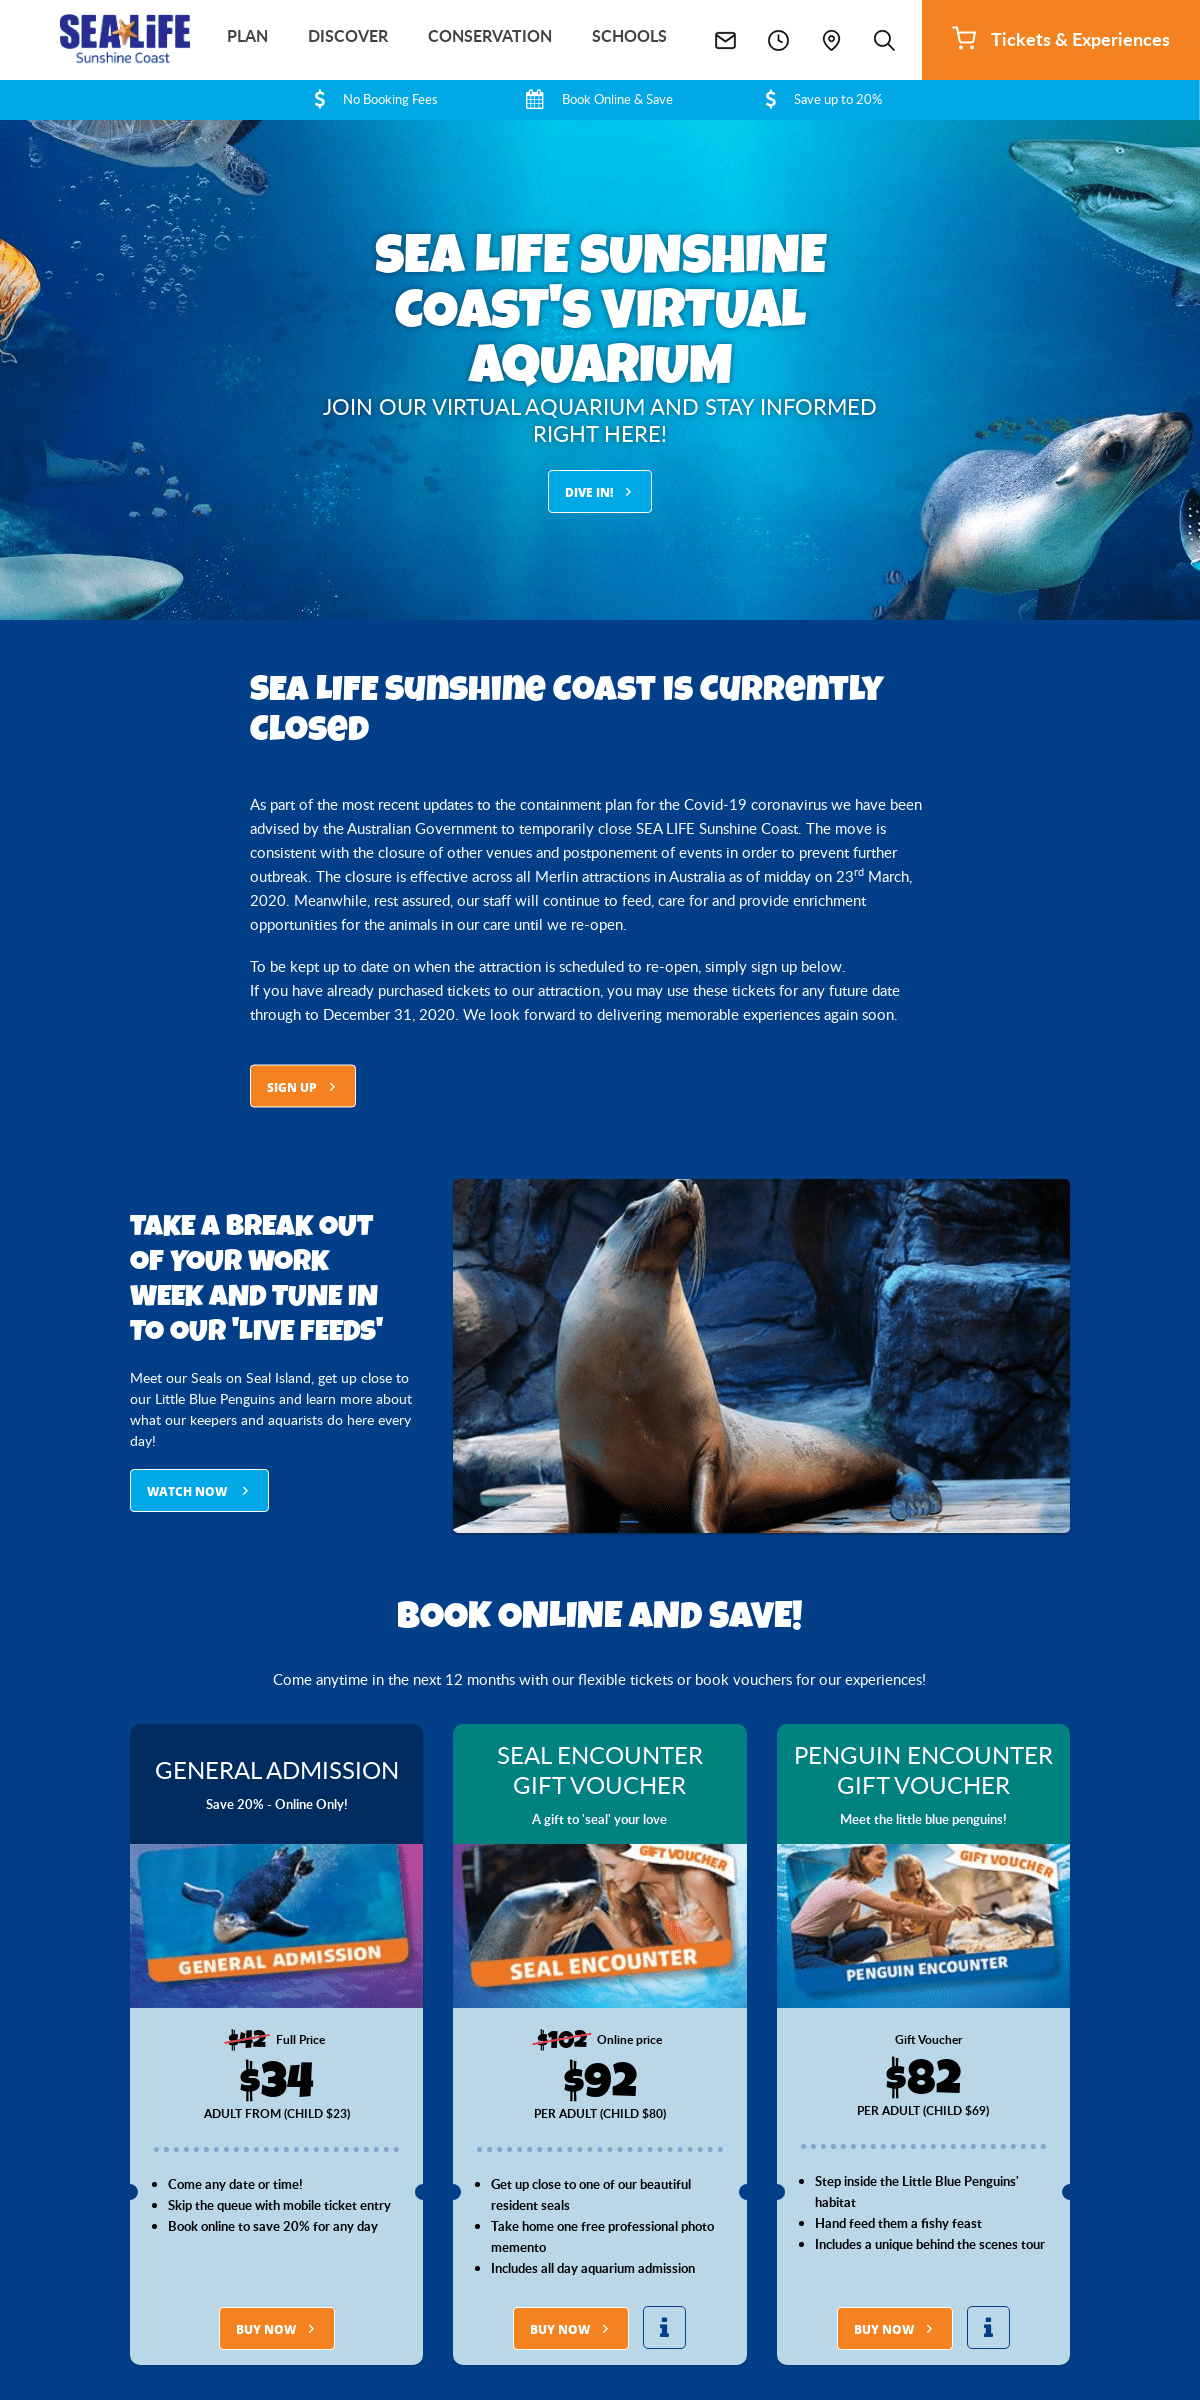 A complete backup of sealifesunshinecoast.com.au